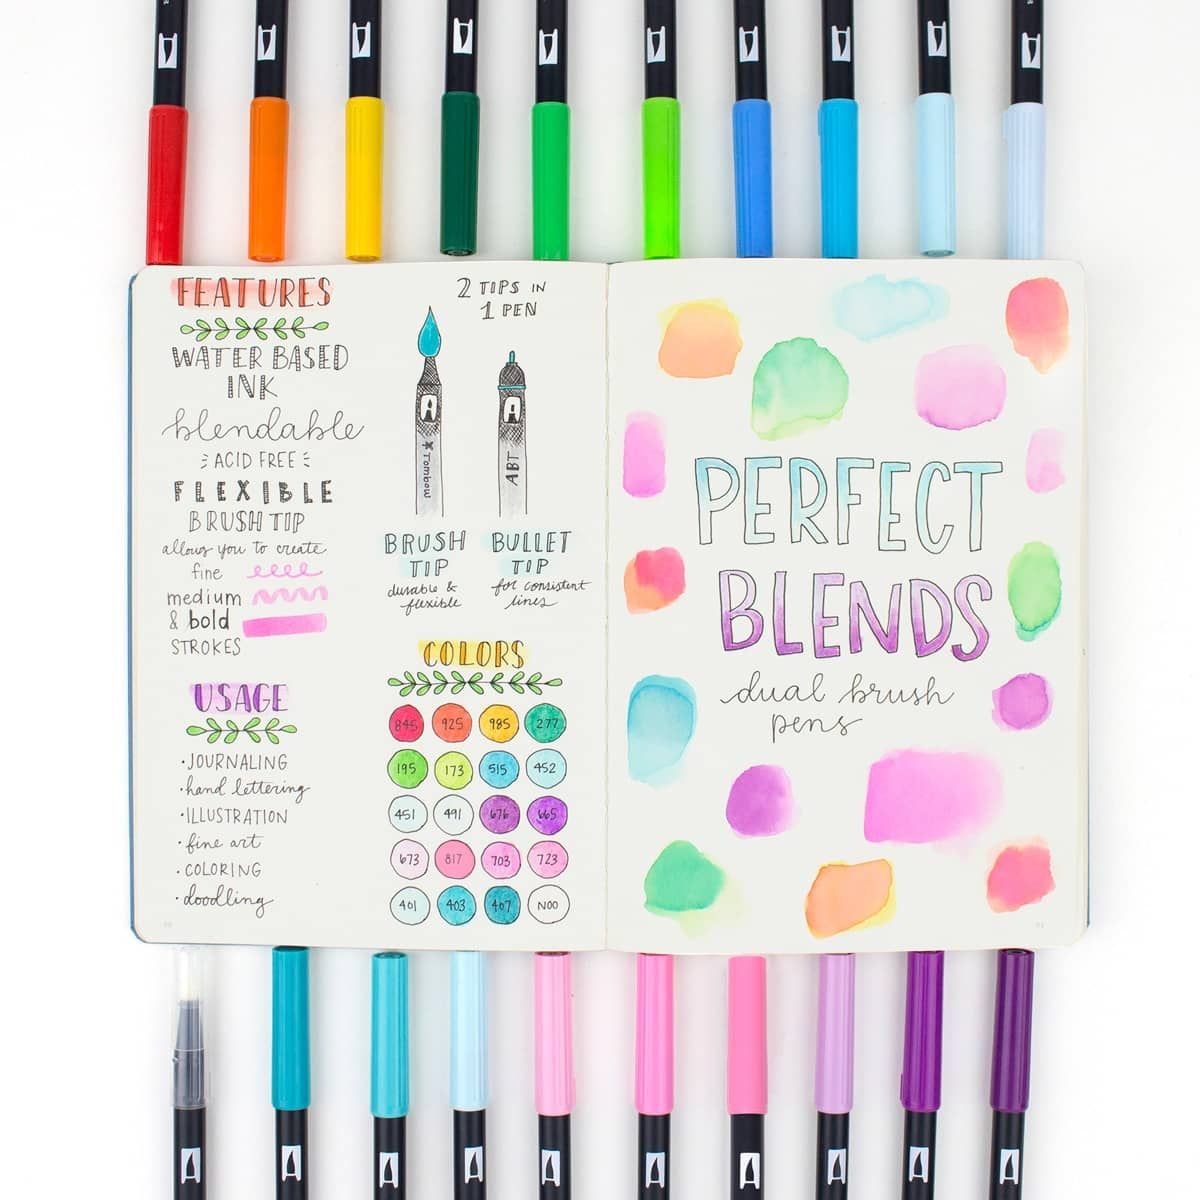 https://www.jerrysartarama.com/media/catalog/product/cache/ecb49a32eeb5603594b082bd5fe65733/t/o/tombow-perfect-blends-colors-dual-brush-pens-beauty.jpg